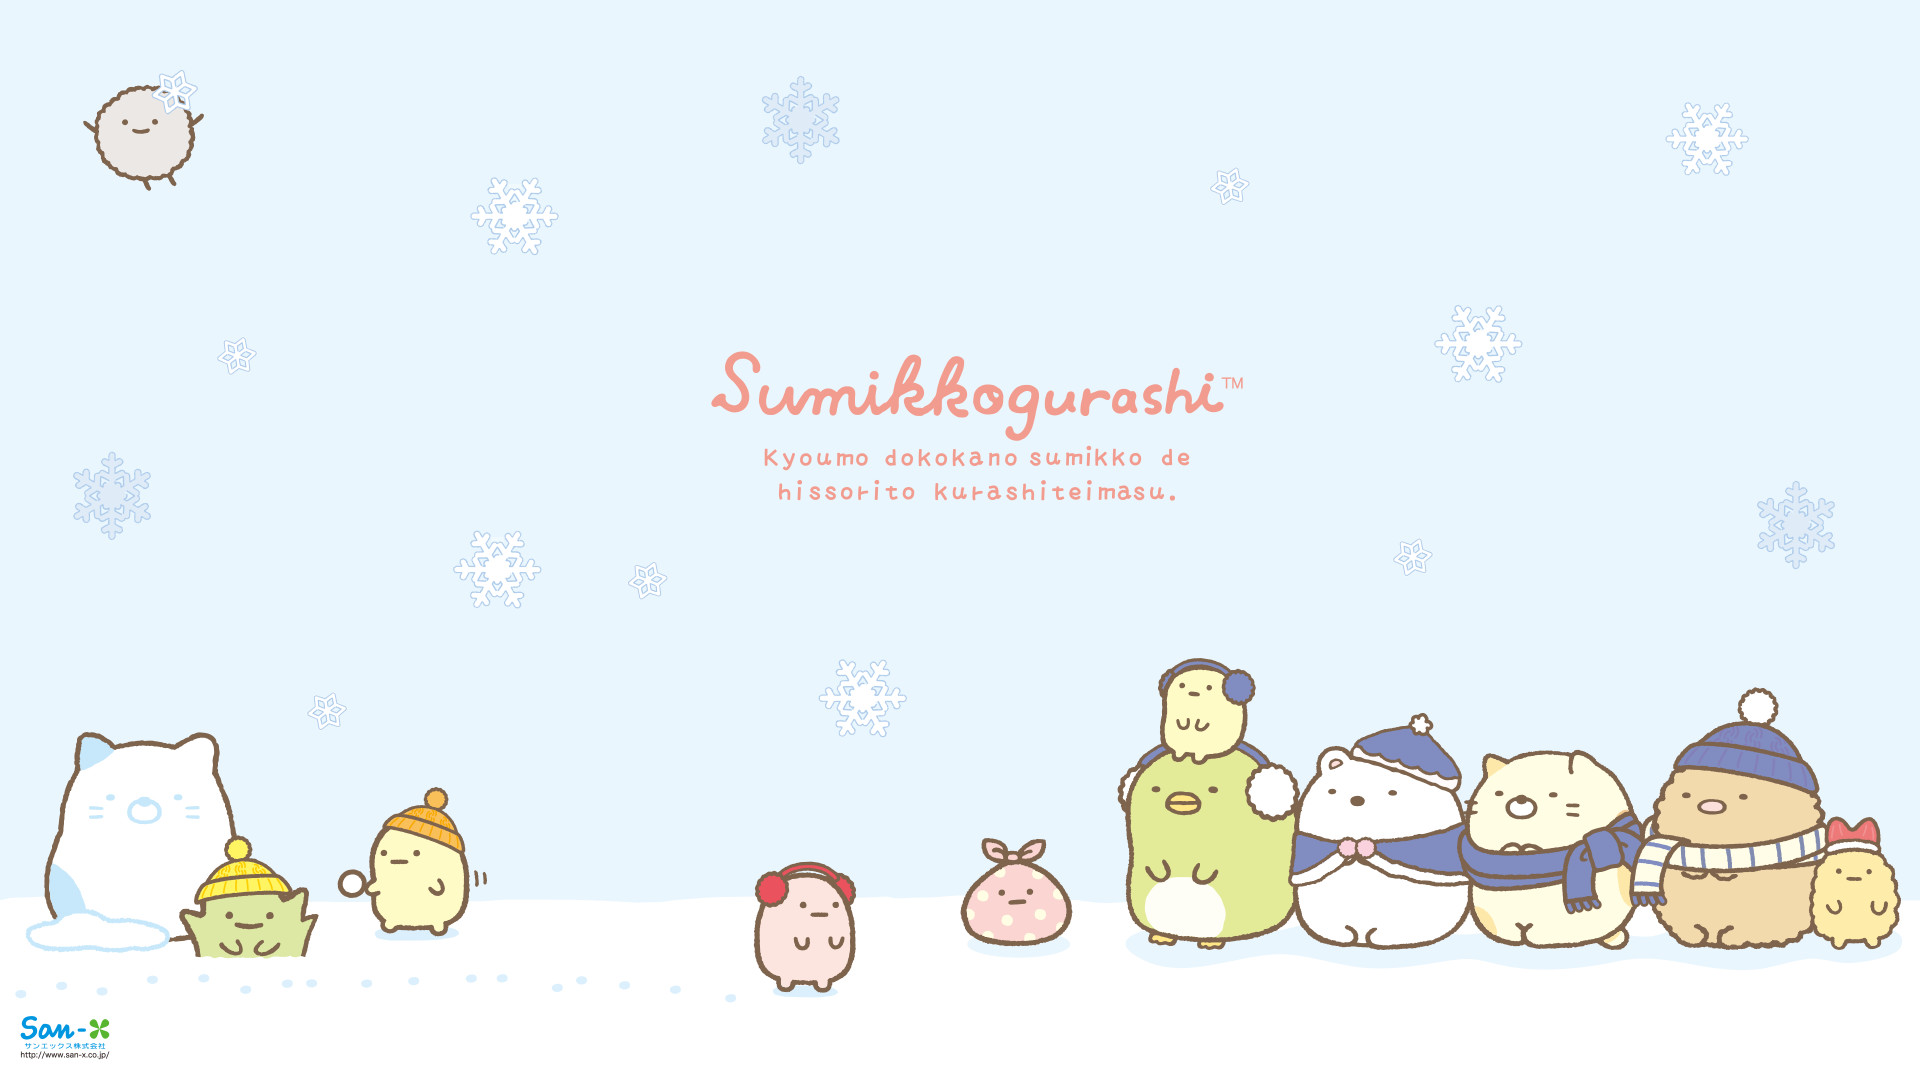 1920x1080 New Sumikkogurashi Christmas Wallpaper - Living quietly in the corner! Such  a cute bunch in the snow! Sumikkogurashi is so cute and random.